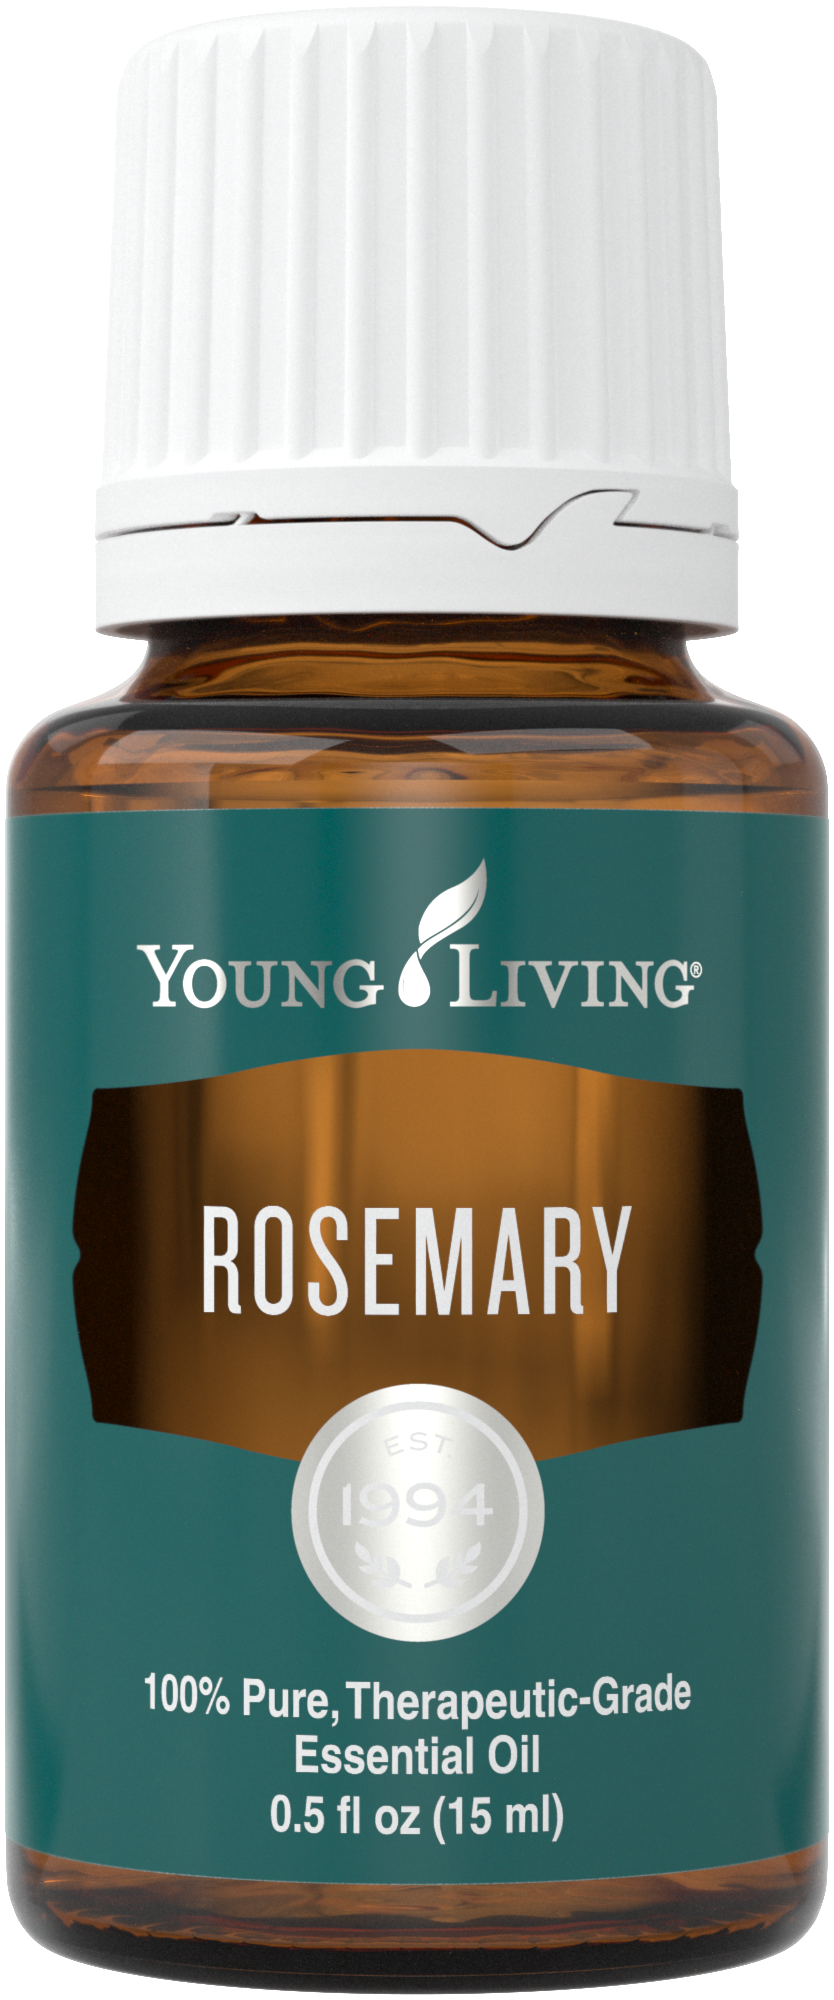 Rosemary Essential Oil Recipes